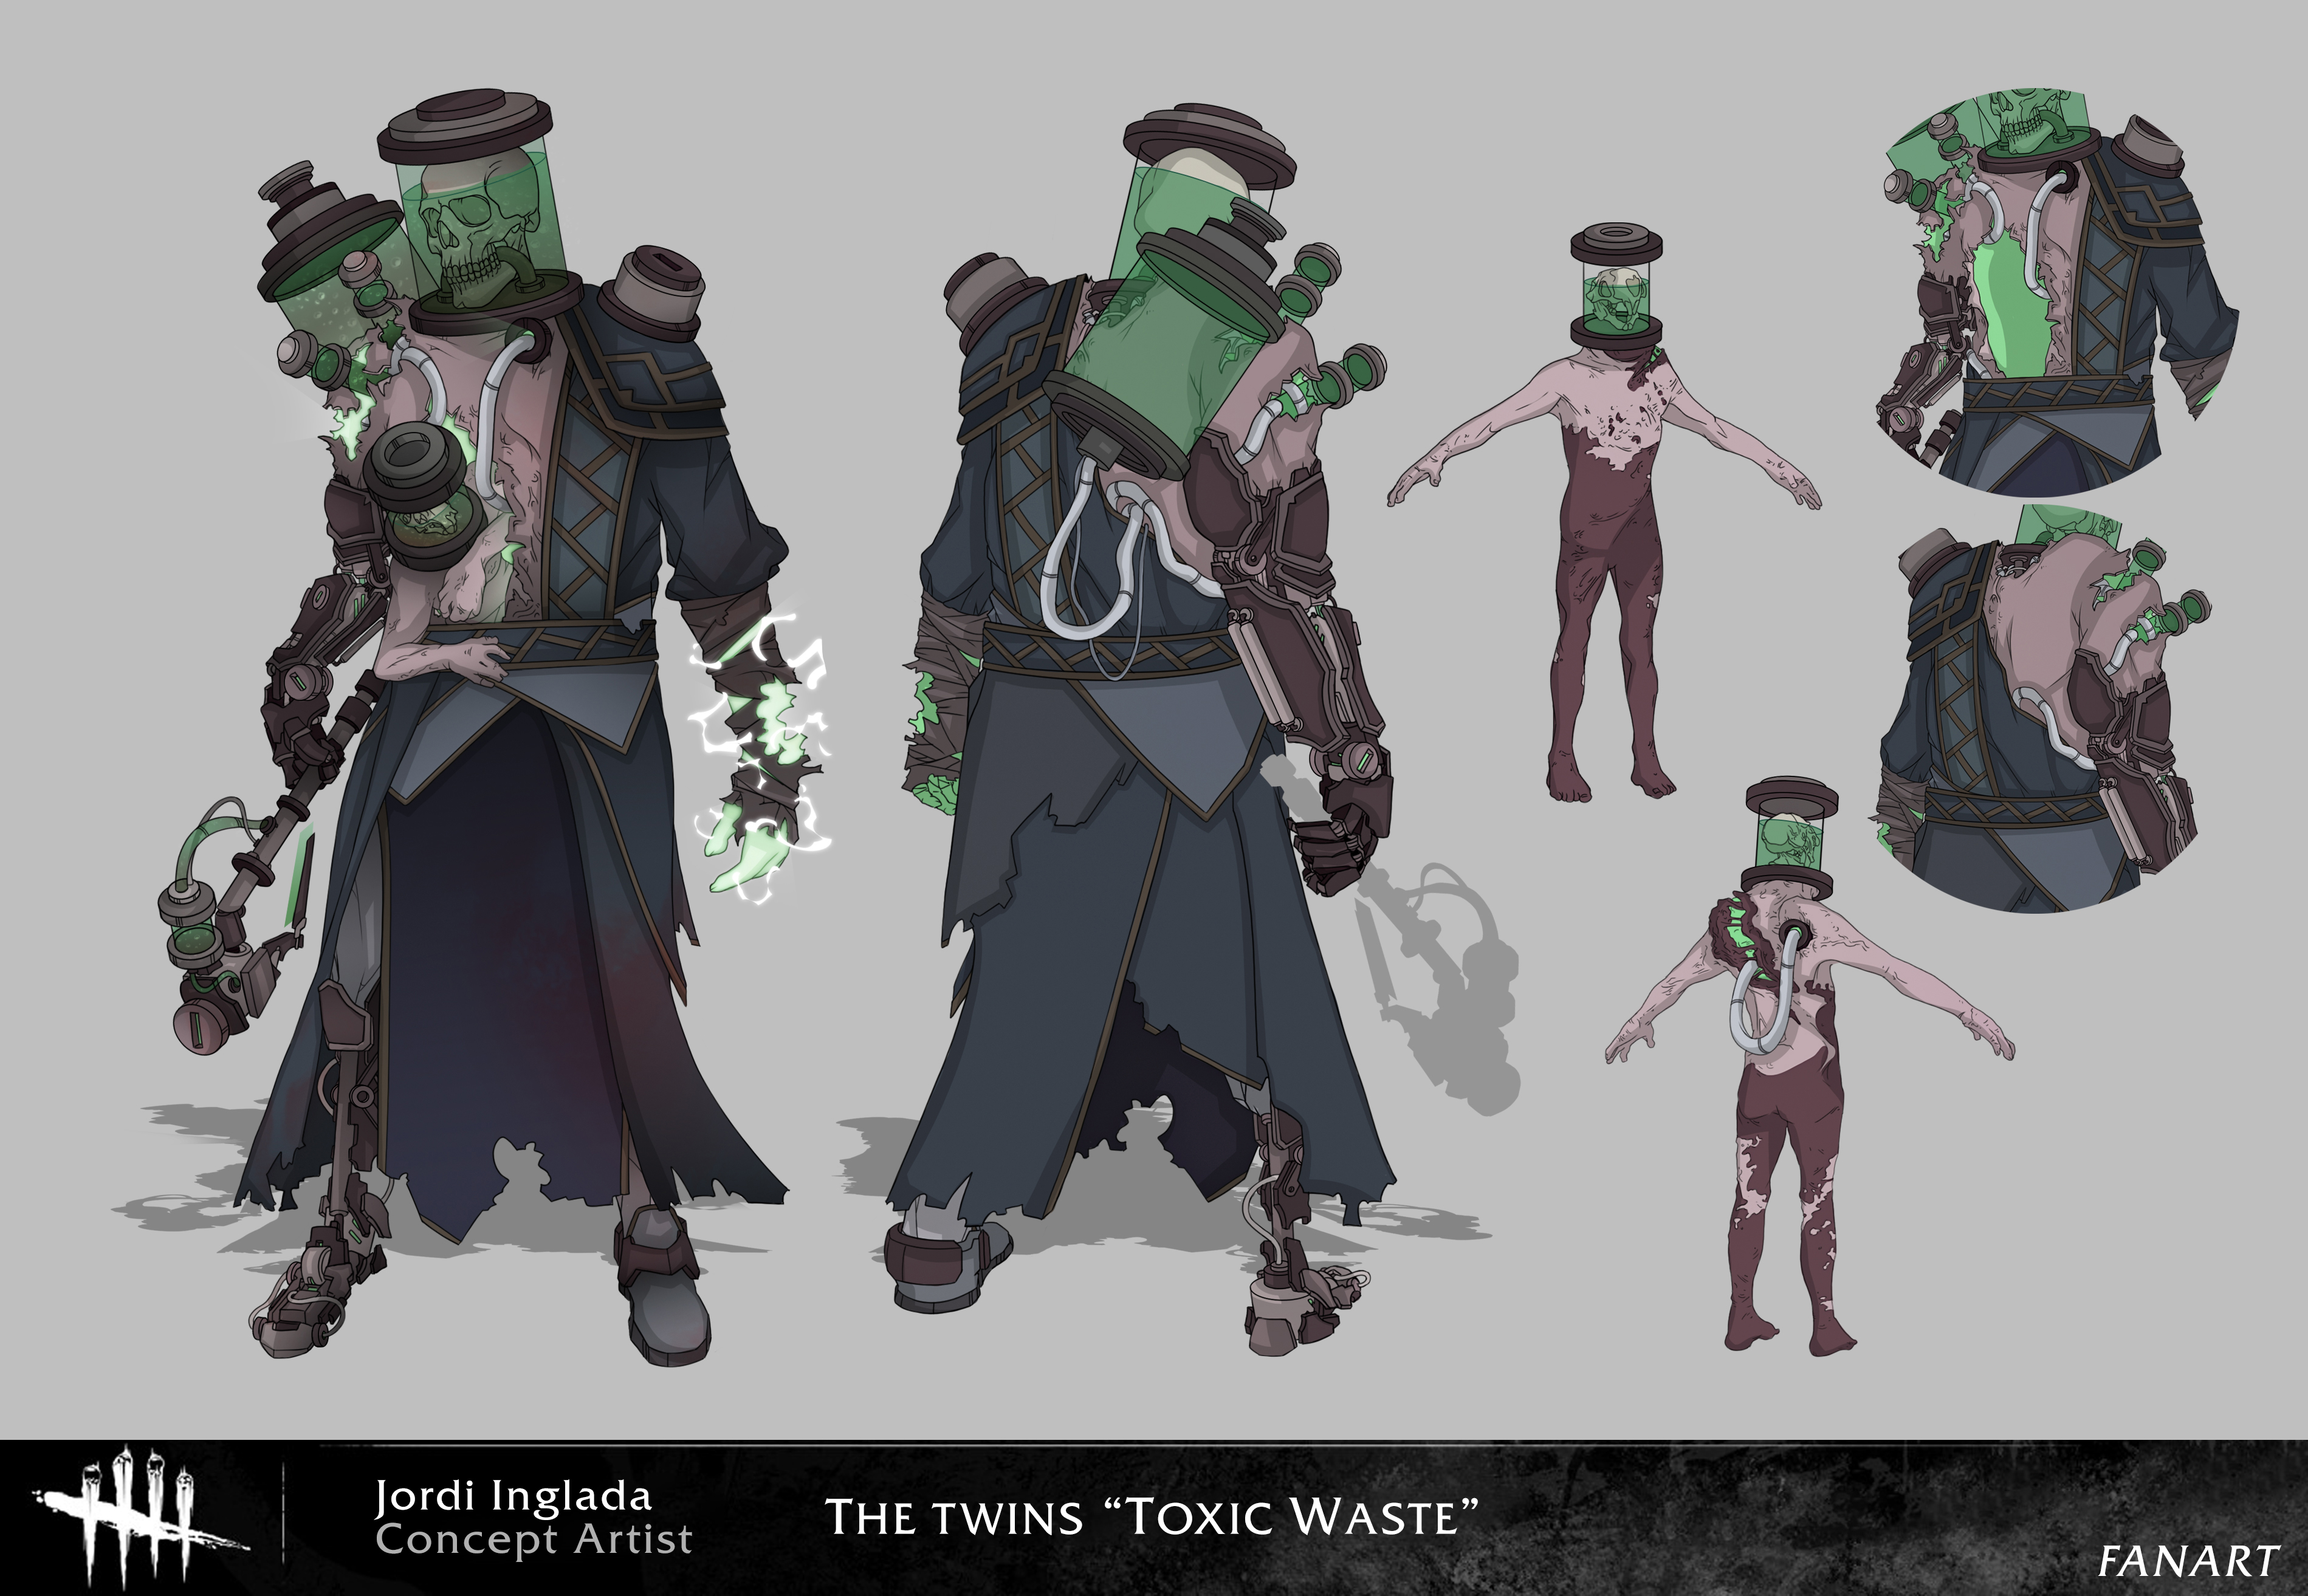 Jordi Inglada
Concept Artist FANART

THE TWINS “TOXIC WASTE”